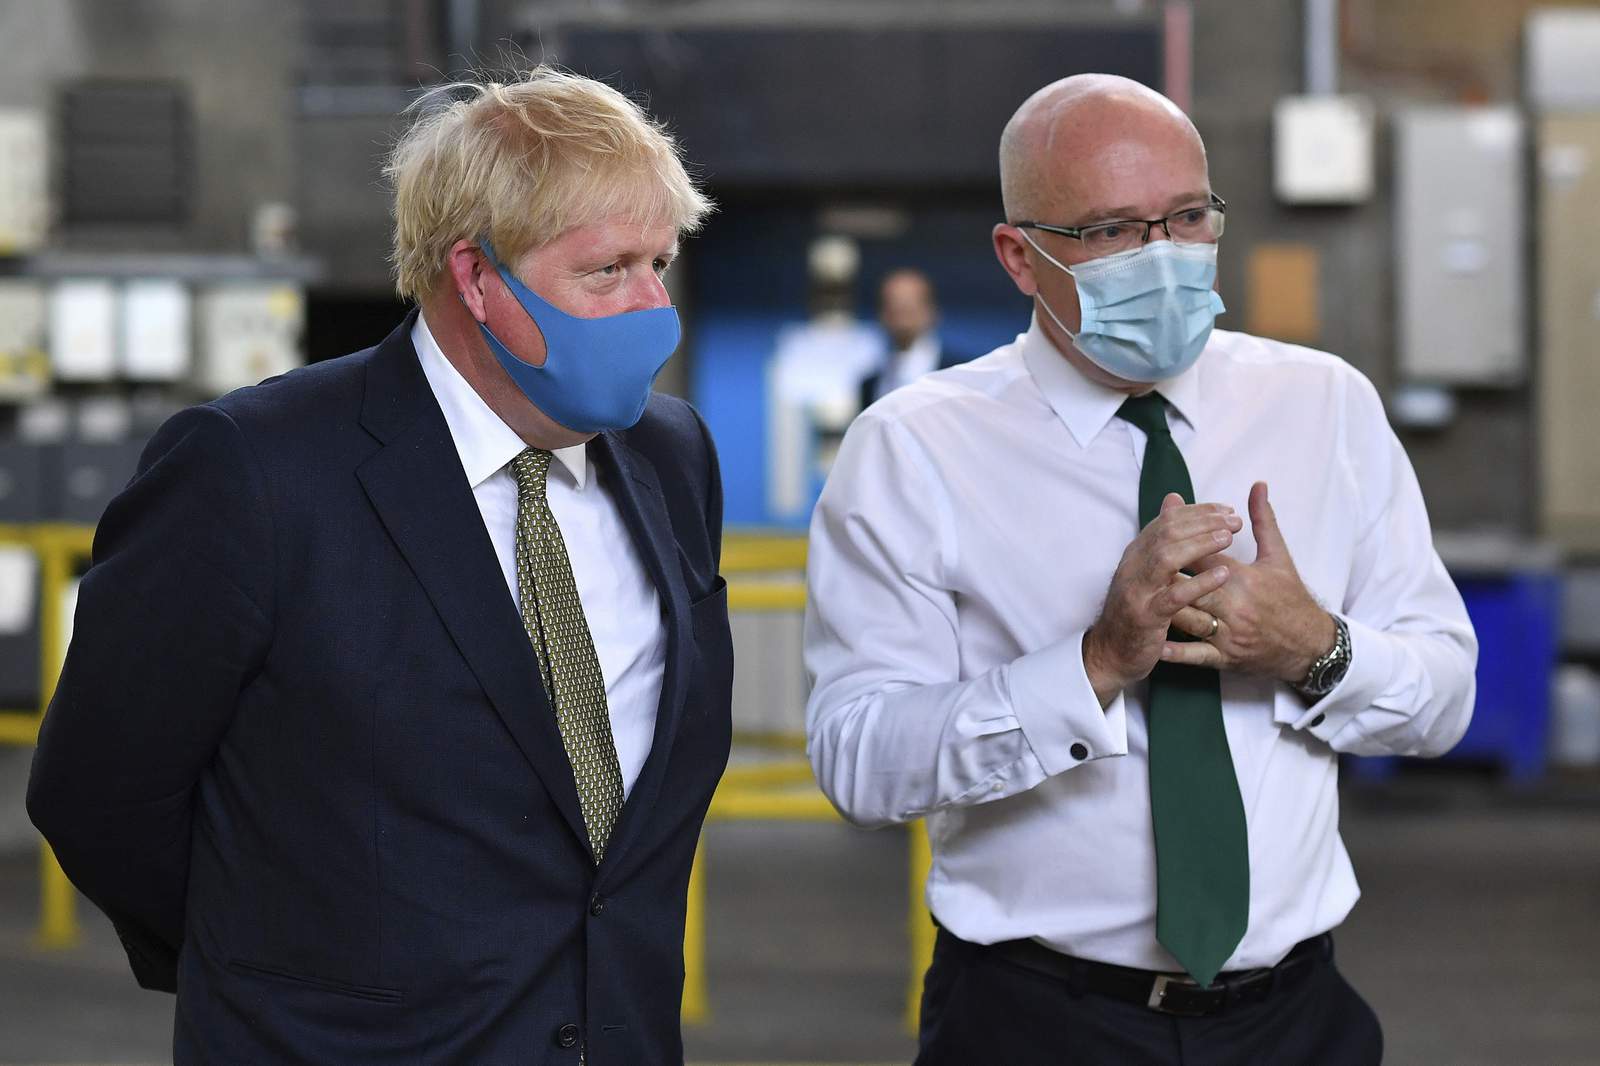 In reversal, UK says it will make masks mandatory in shops